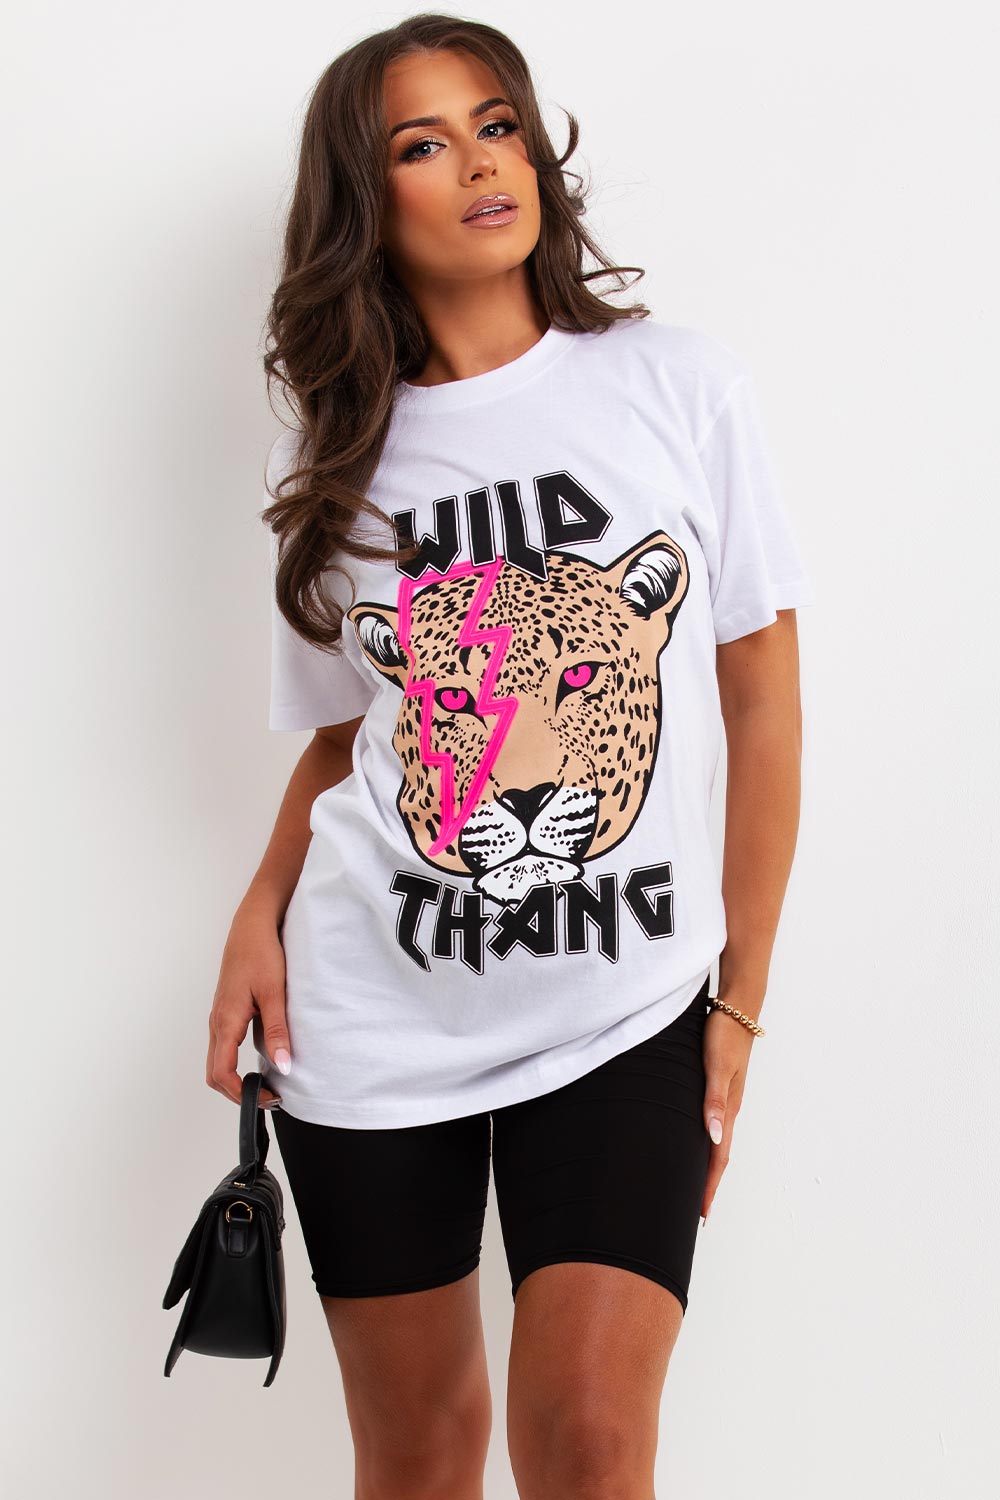 wild thang graphic t shirt womens